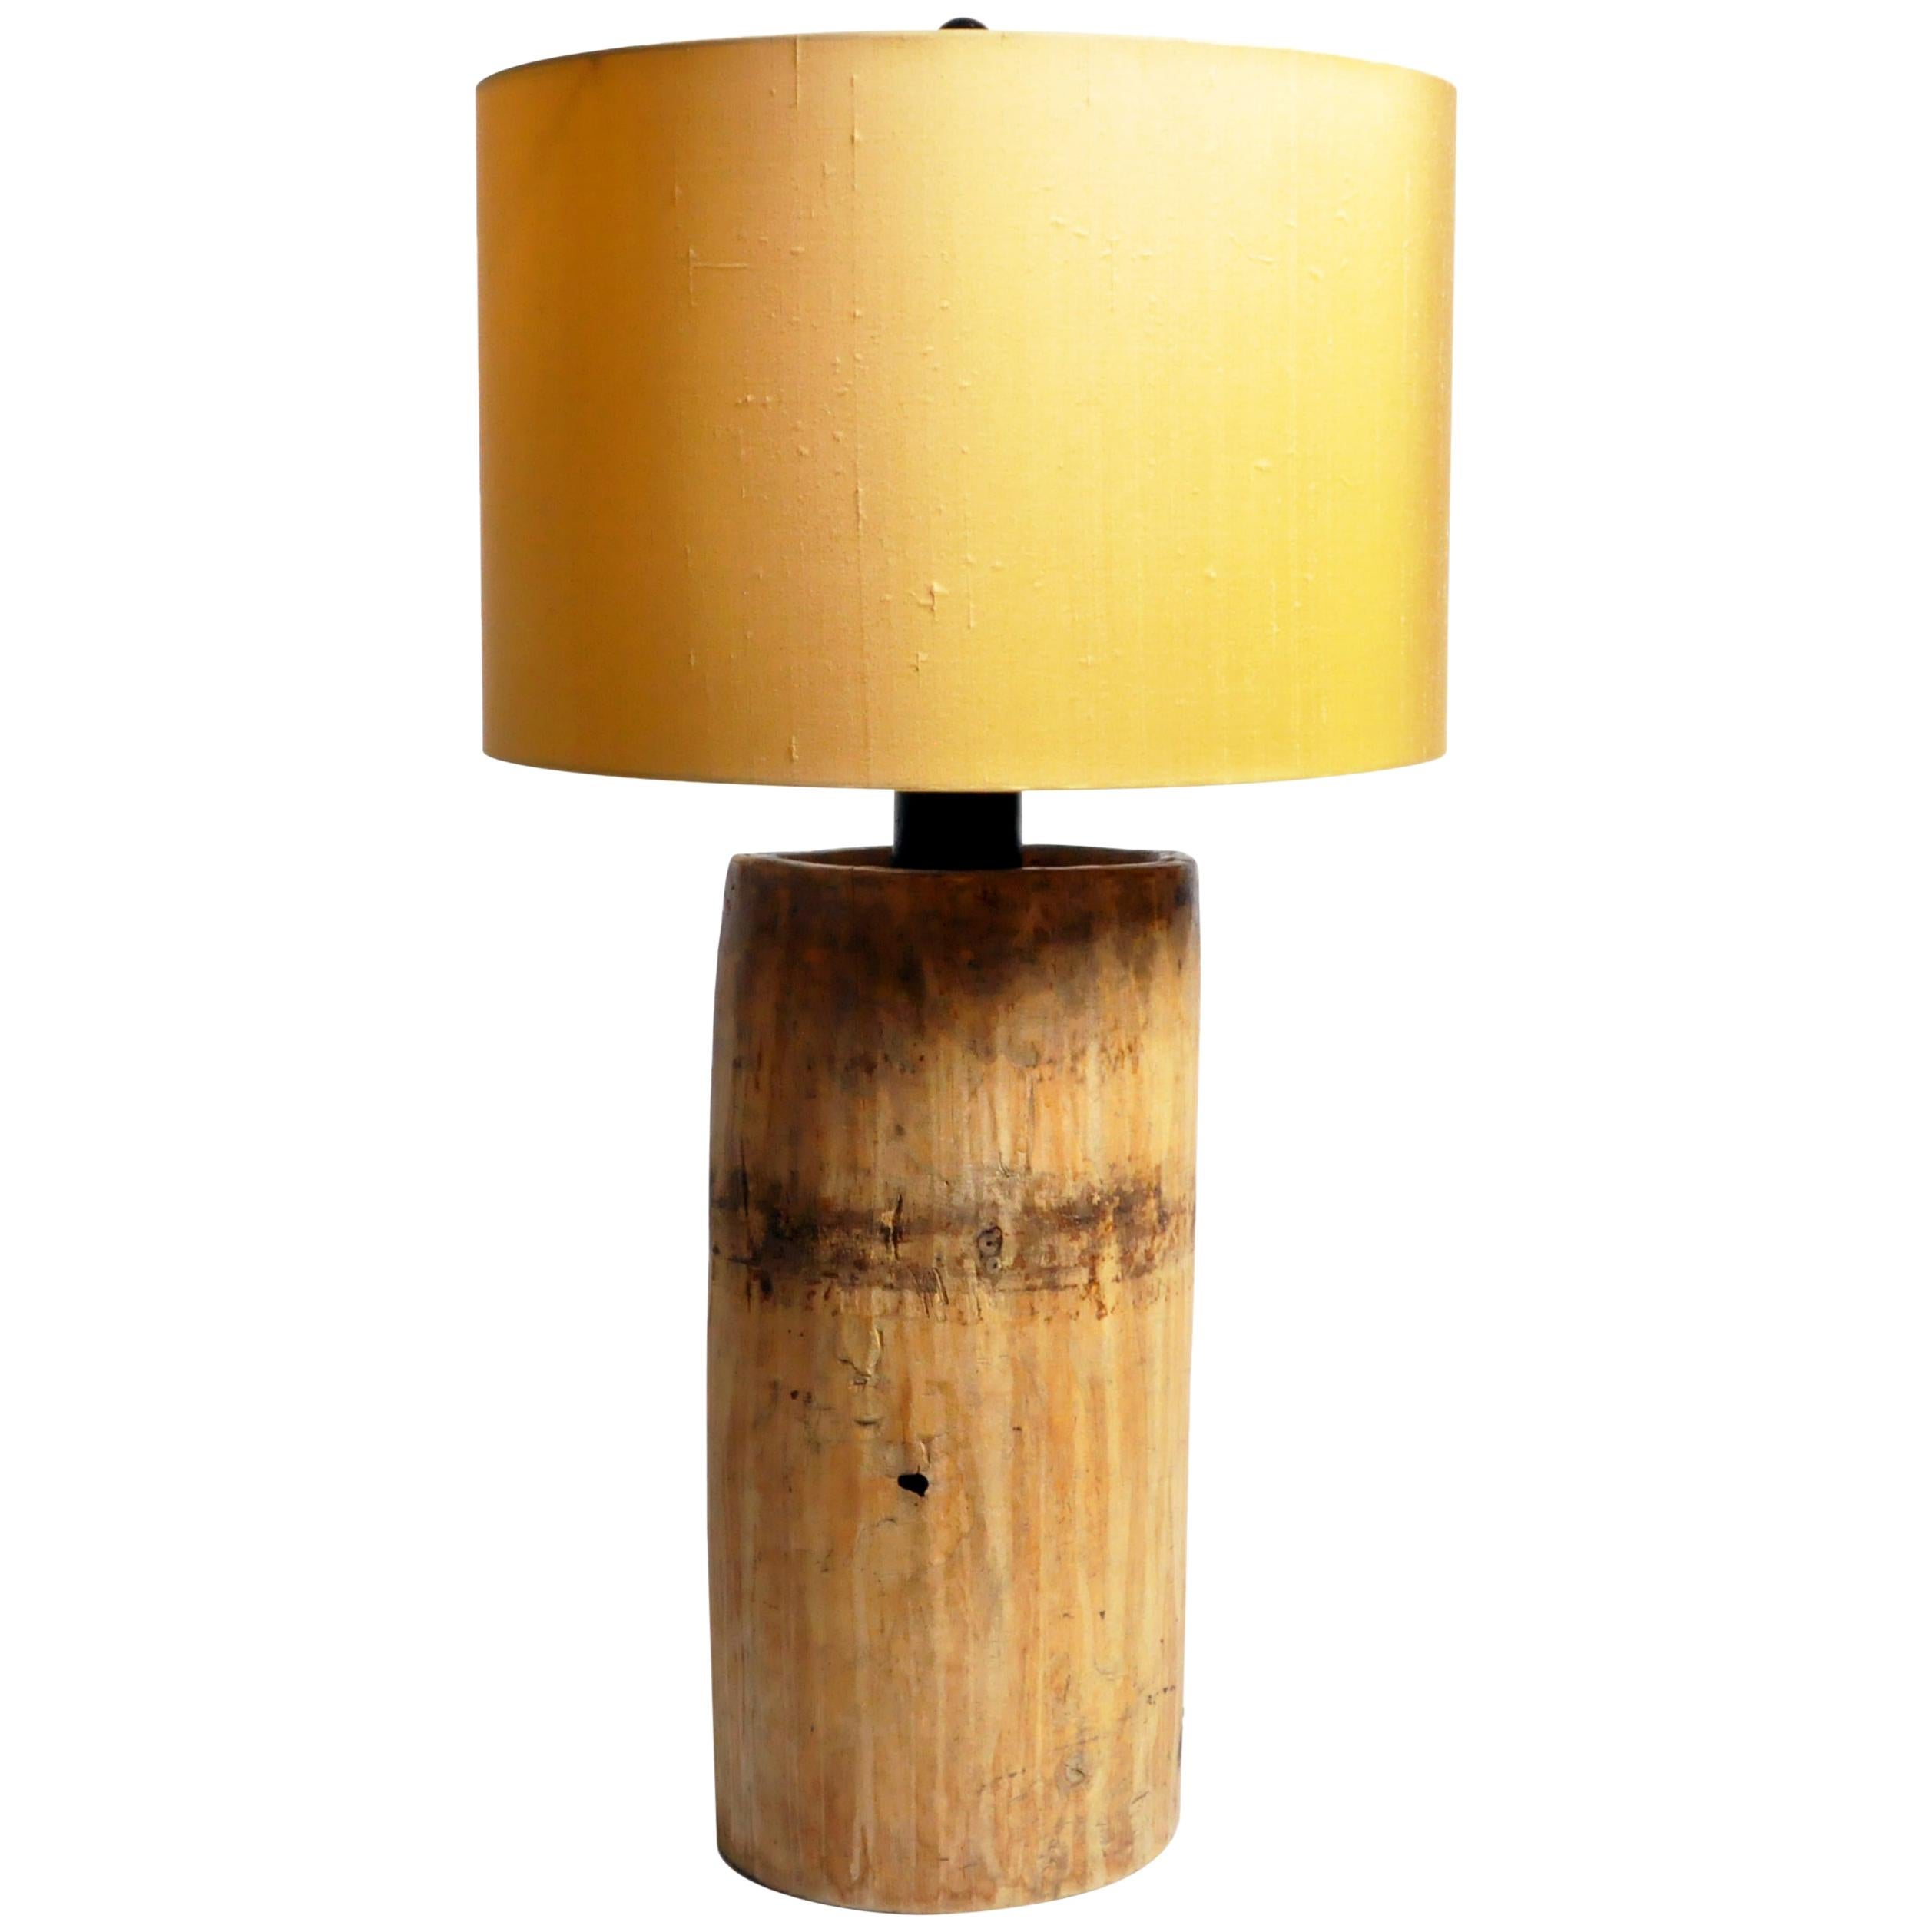 Custom Table Lamp Made From Reclaimed, Reclaimed Wood Light Table